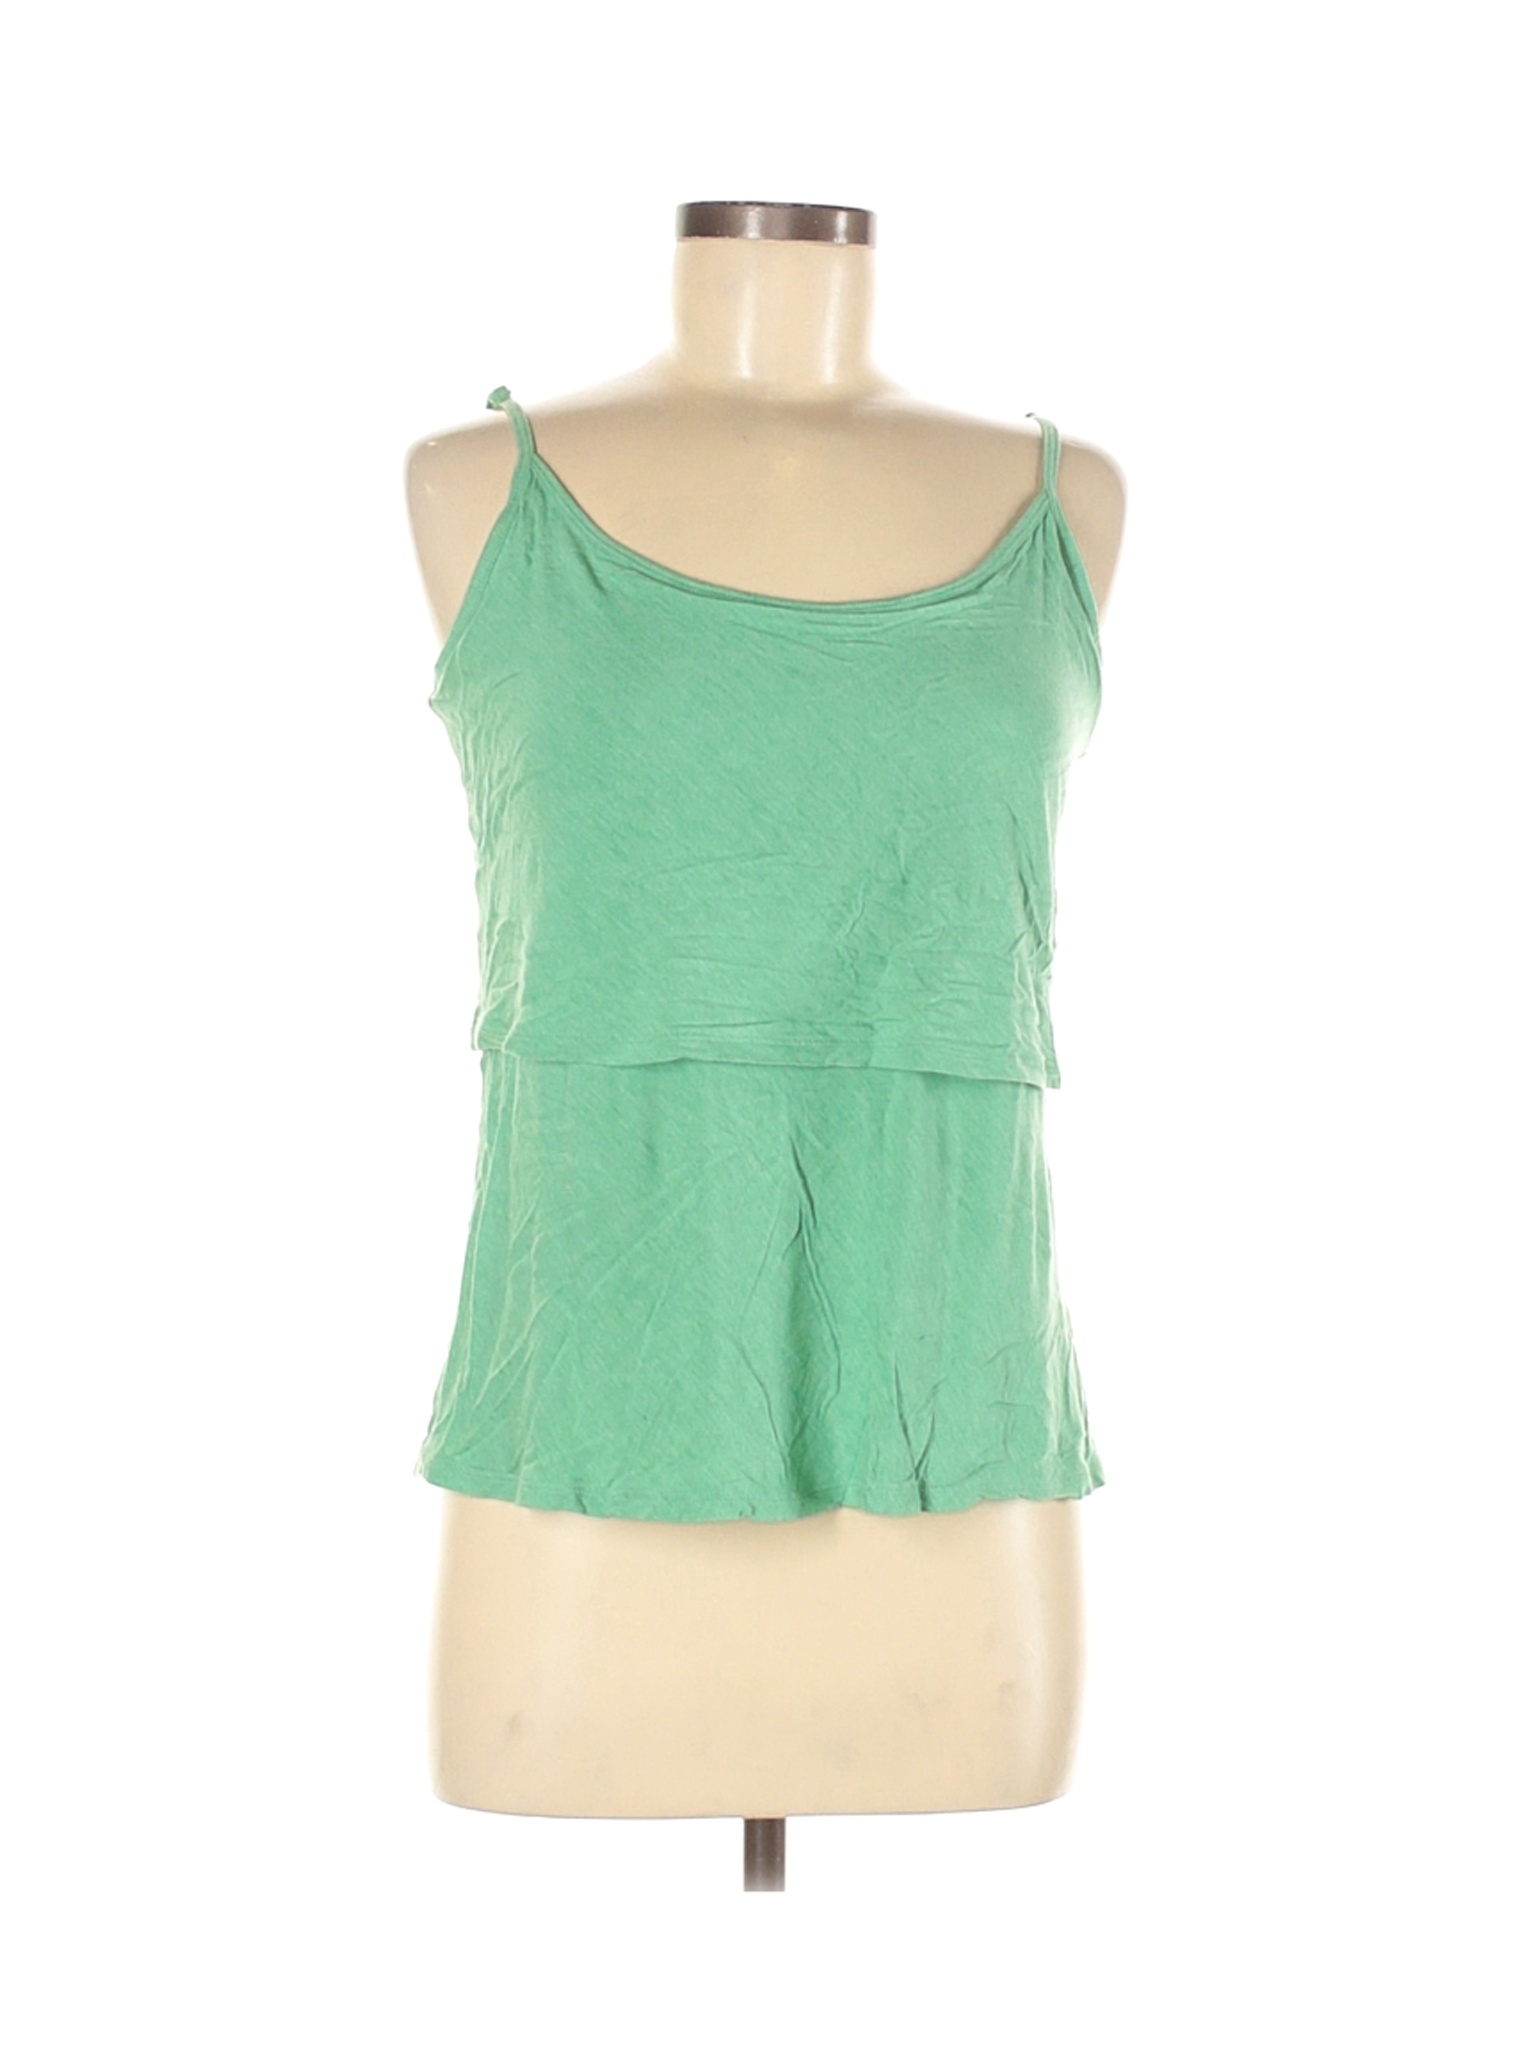 CAbi Women Green Sleeveless Top M | eBay